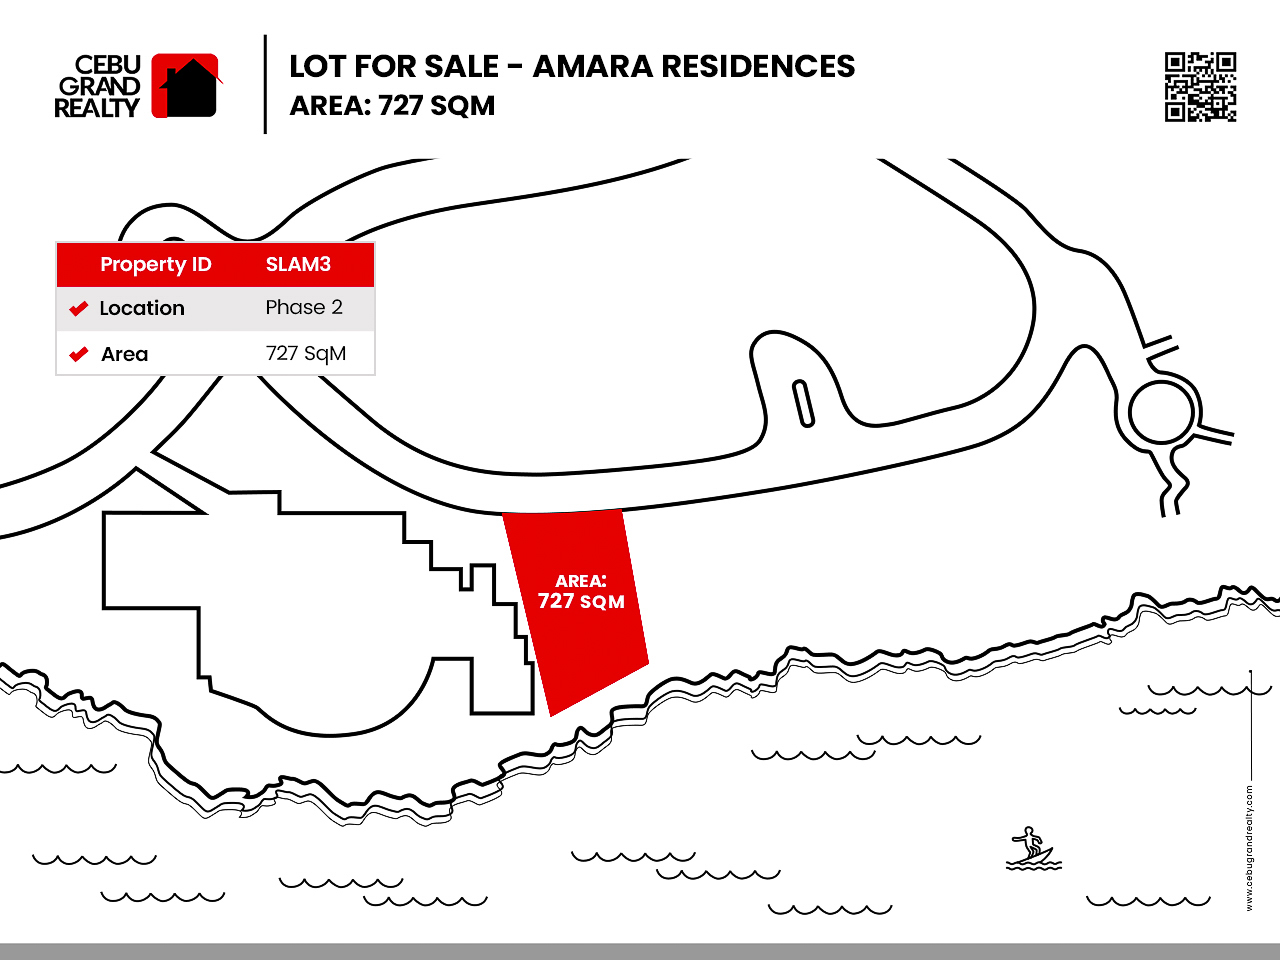 SLAM3 - Premier Beachfront Lot for Sale in Amara Residences - Phase 2 - 727 SqM - Cebu Grand Realty (